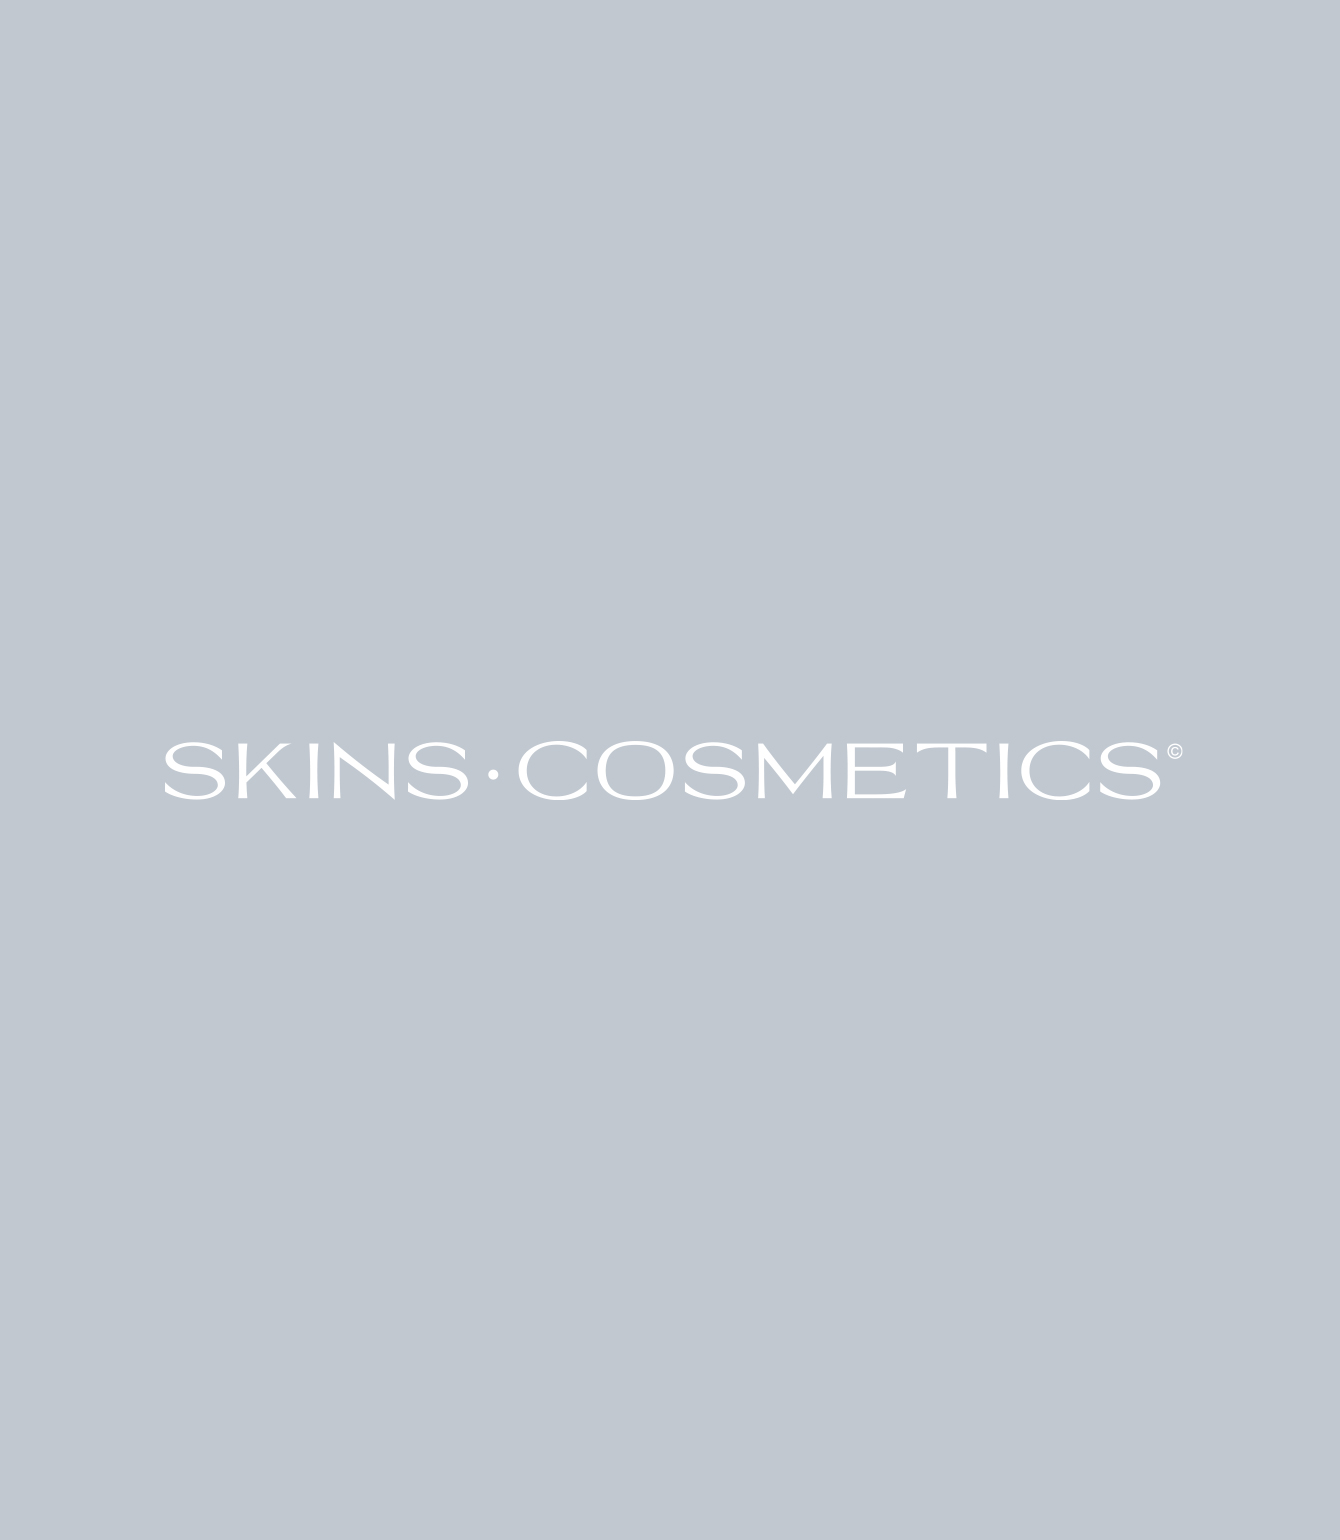 skins cosmetics logo